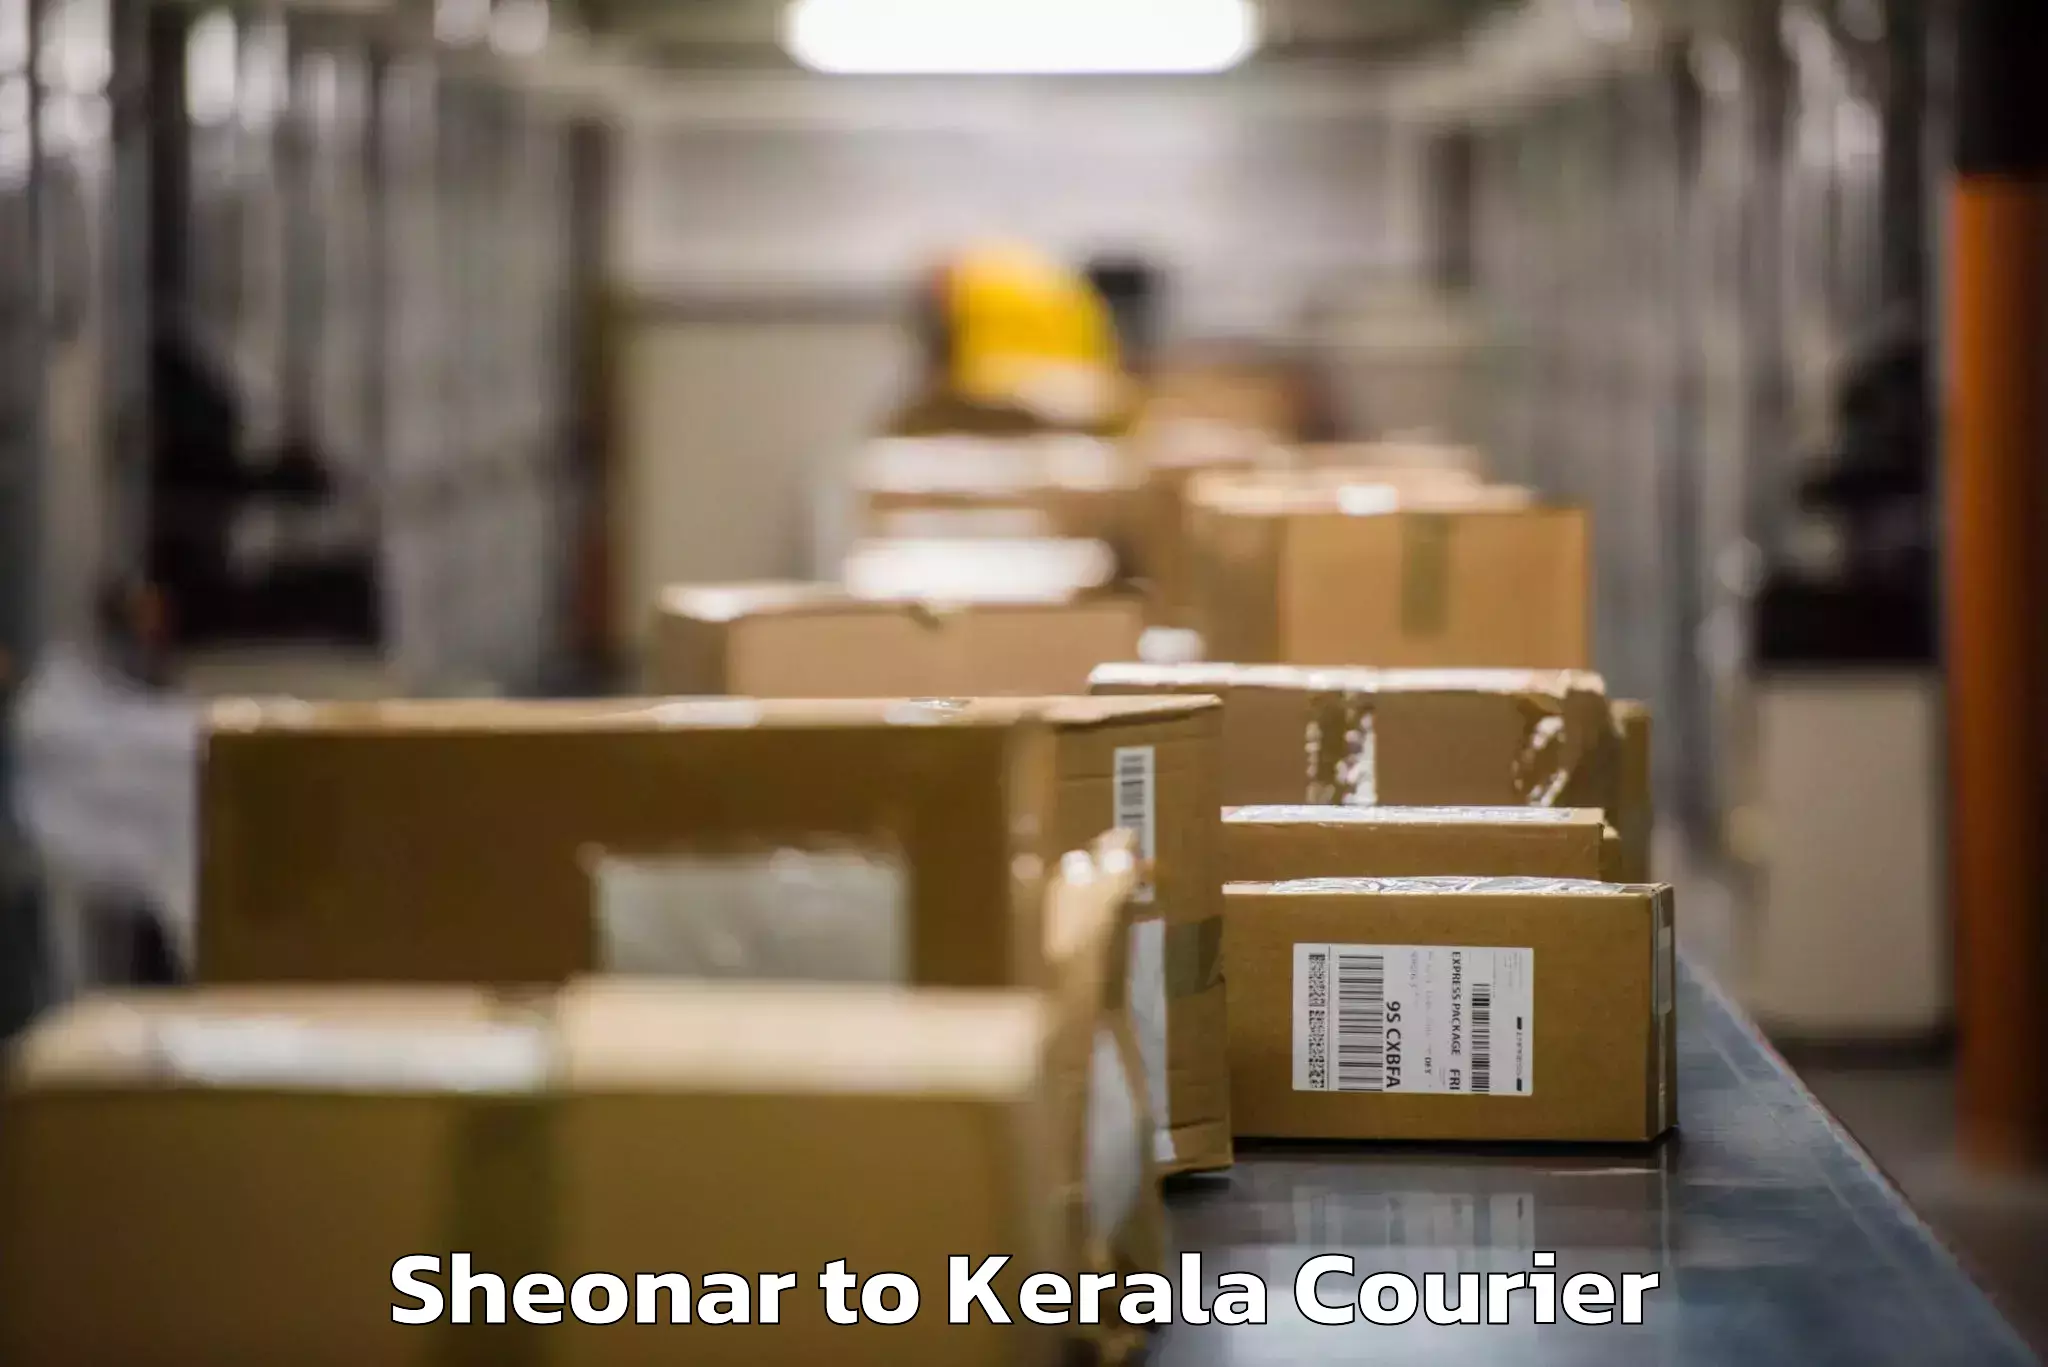 Luggage shipment specialists Sheonar to Kerala